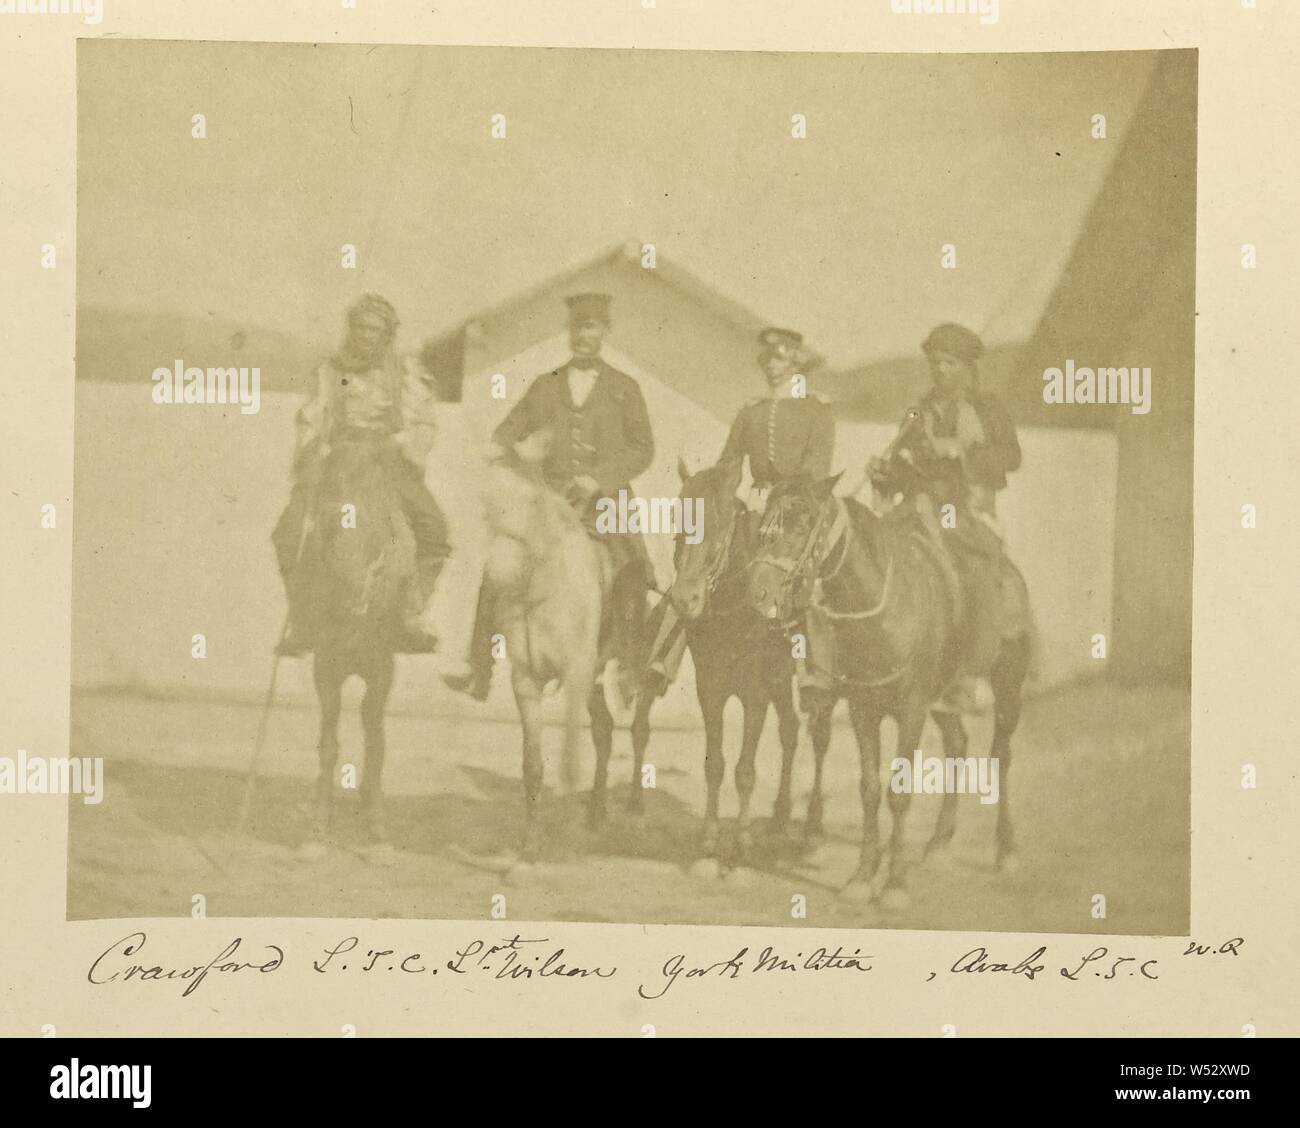 Crawford L.T.C., Lieut. Wilson, Gorti Militia, Arabs L.T.C., Dr. William Robertson (Scottish, 1818 - 1882), Turkey, 1855 - 1856, Albumen silver print, 8.1 × 10.4 cm (3 3/16 × 4 1/8 in Stock Photo